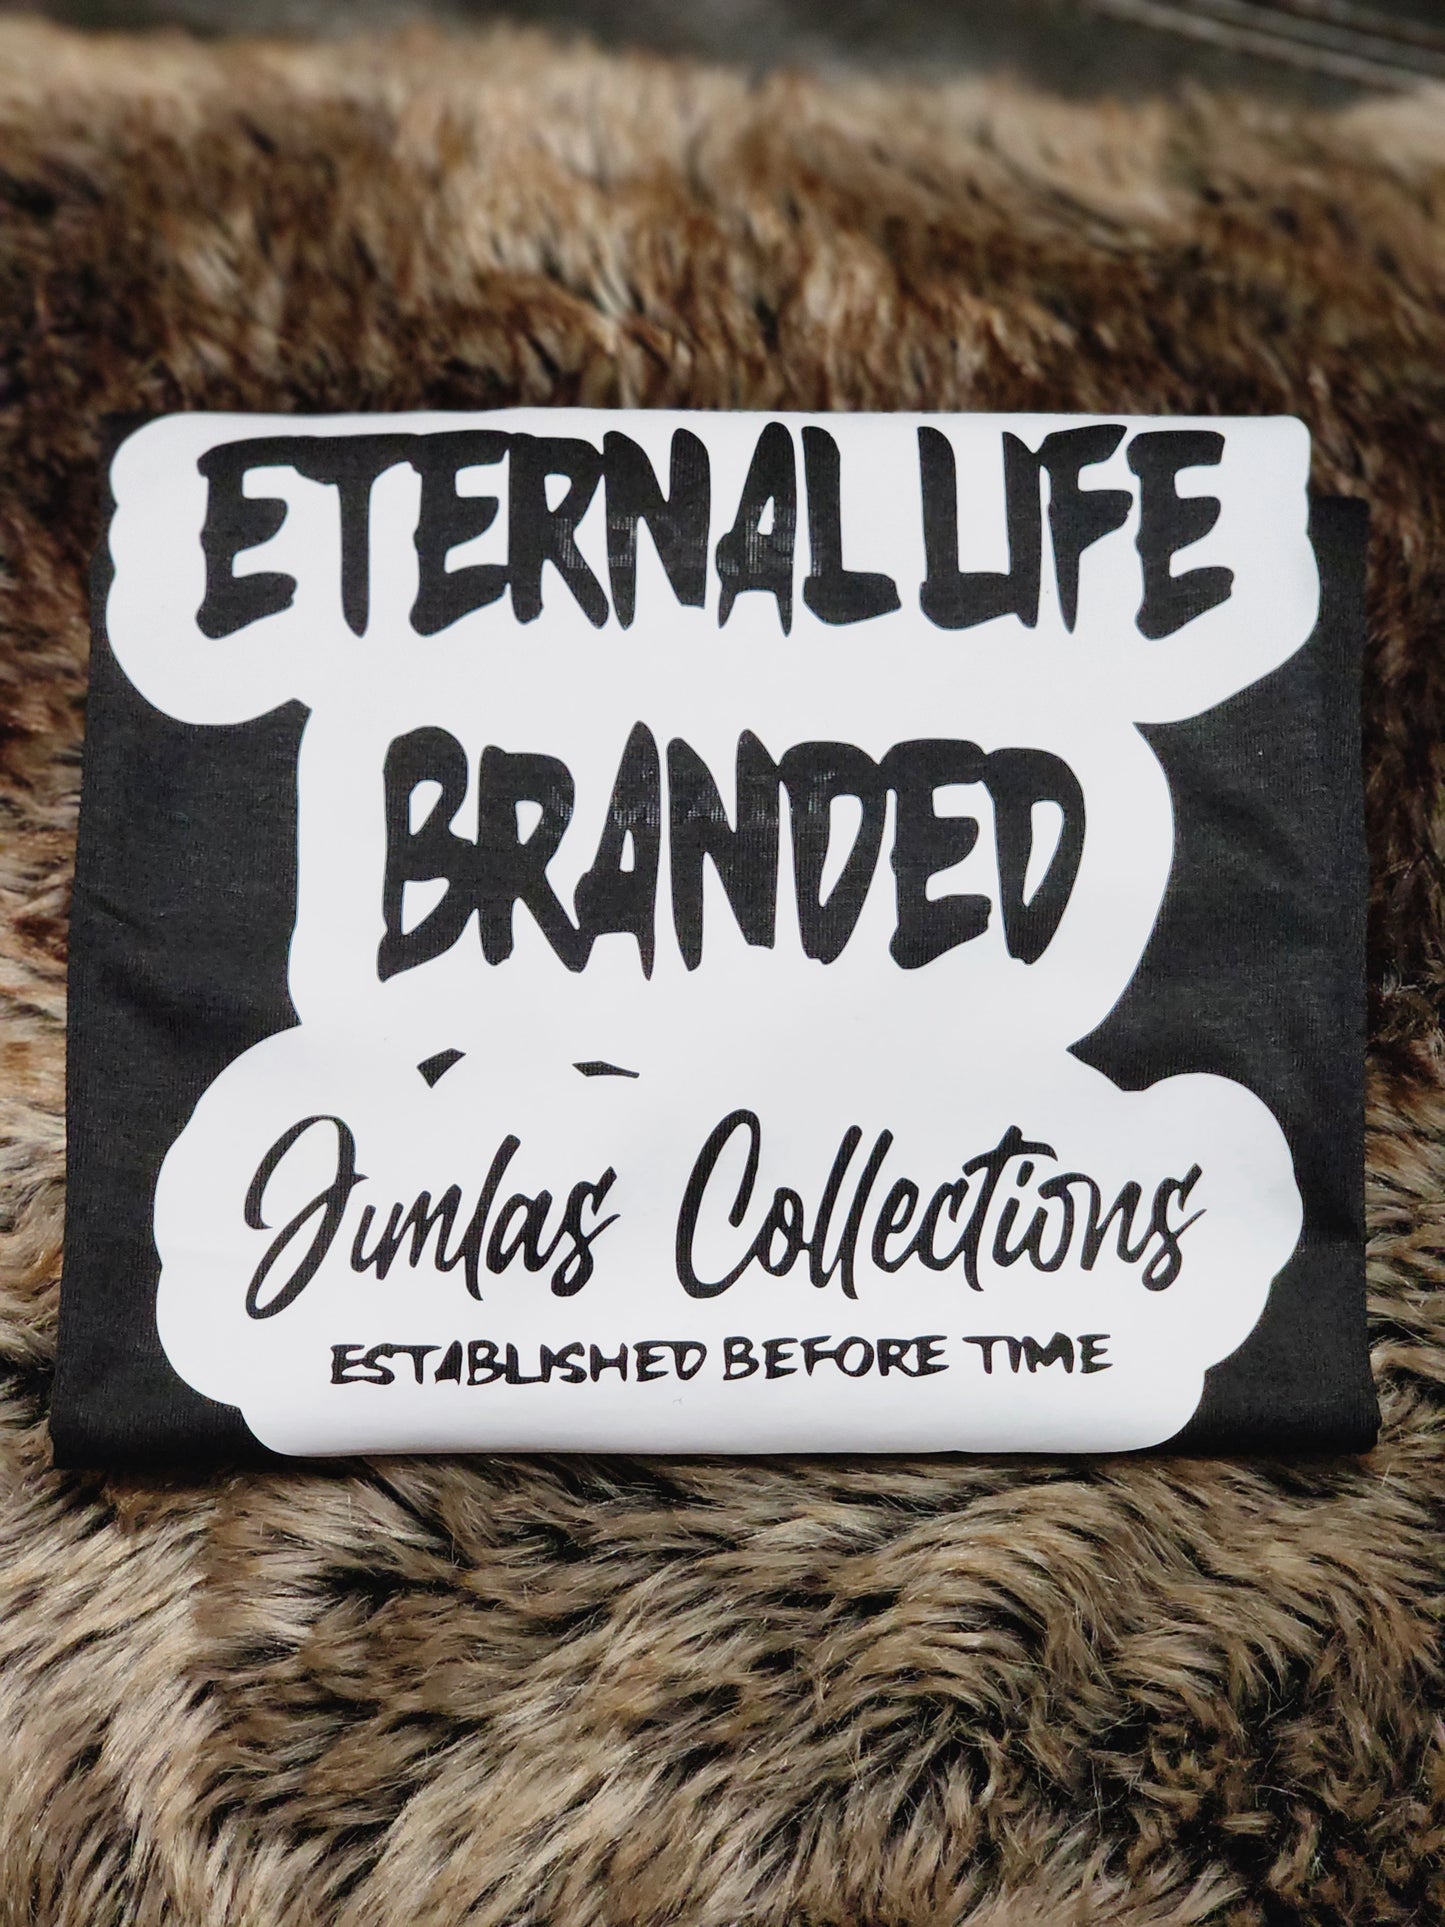 Eternal Life Branded